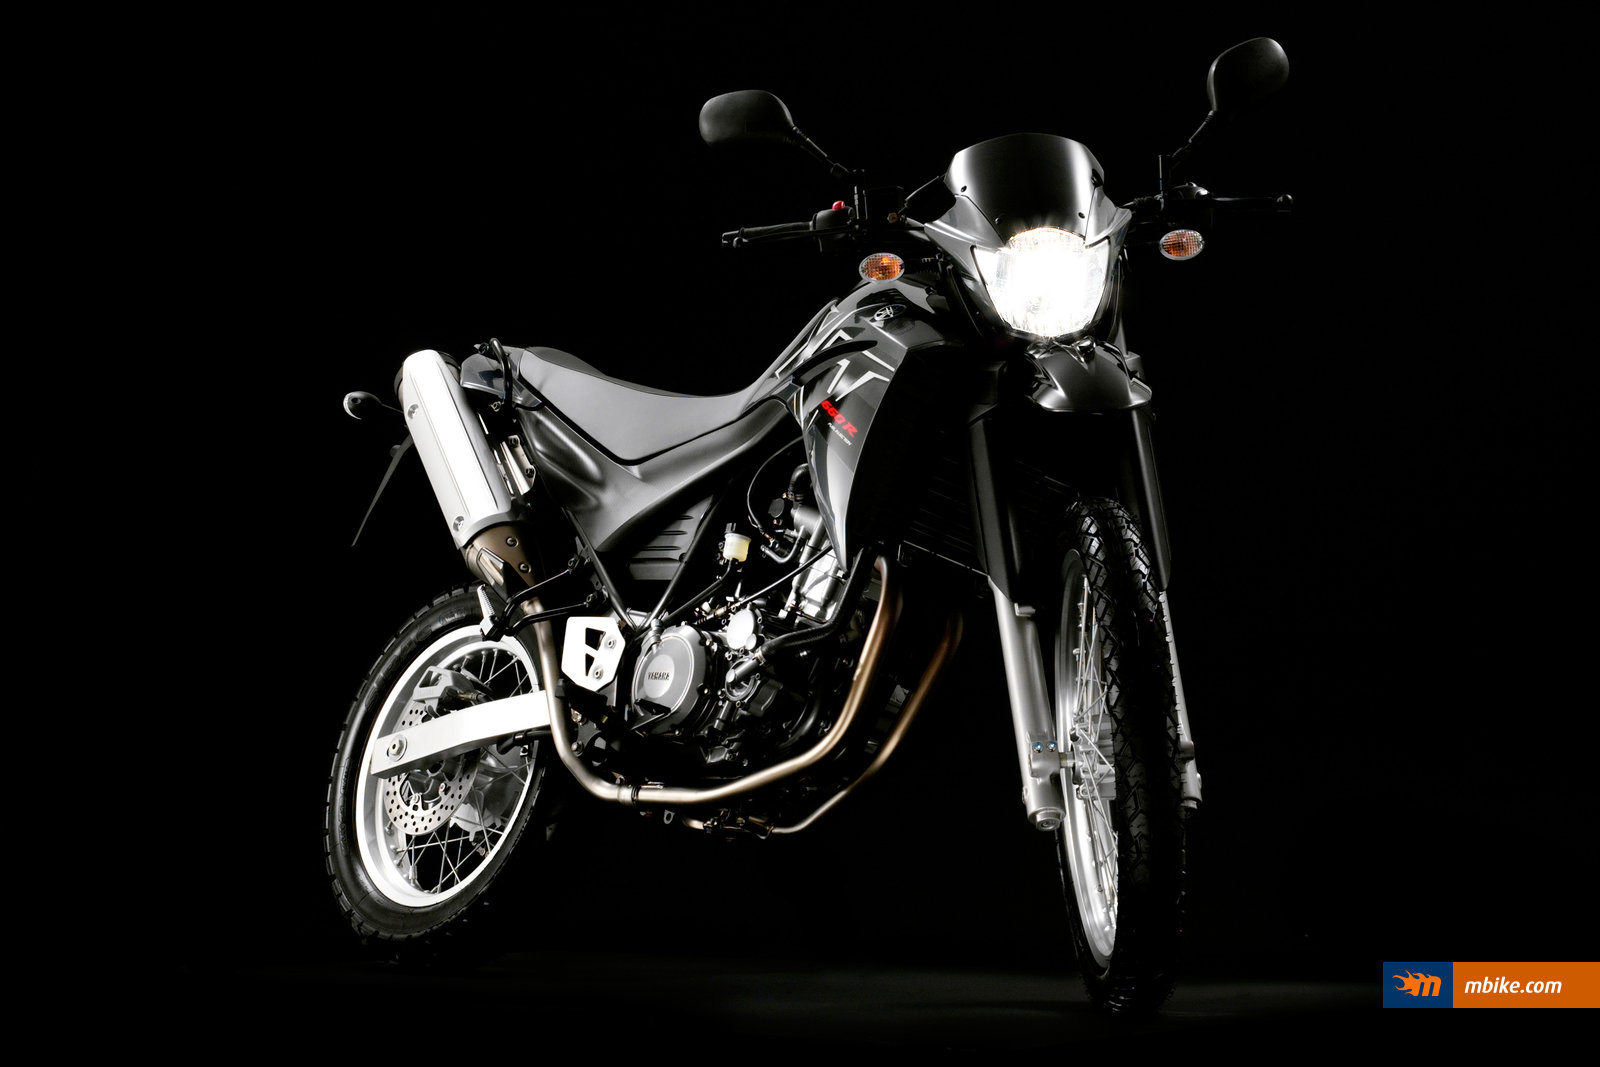 2006 Yamaha XT 660 R